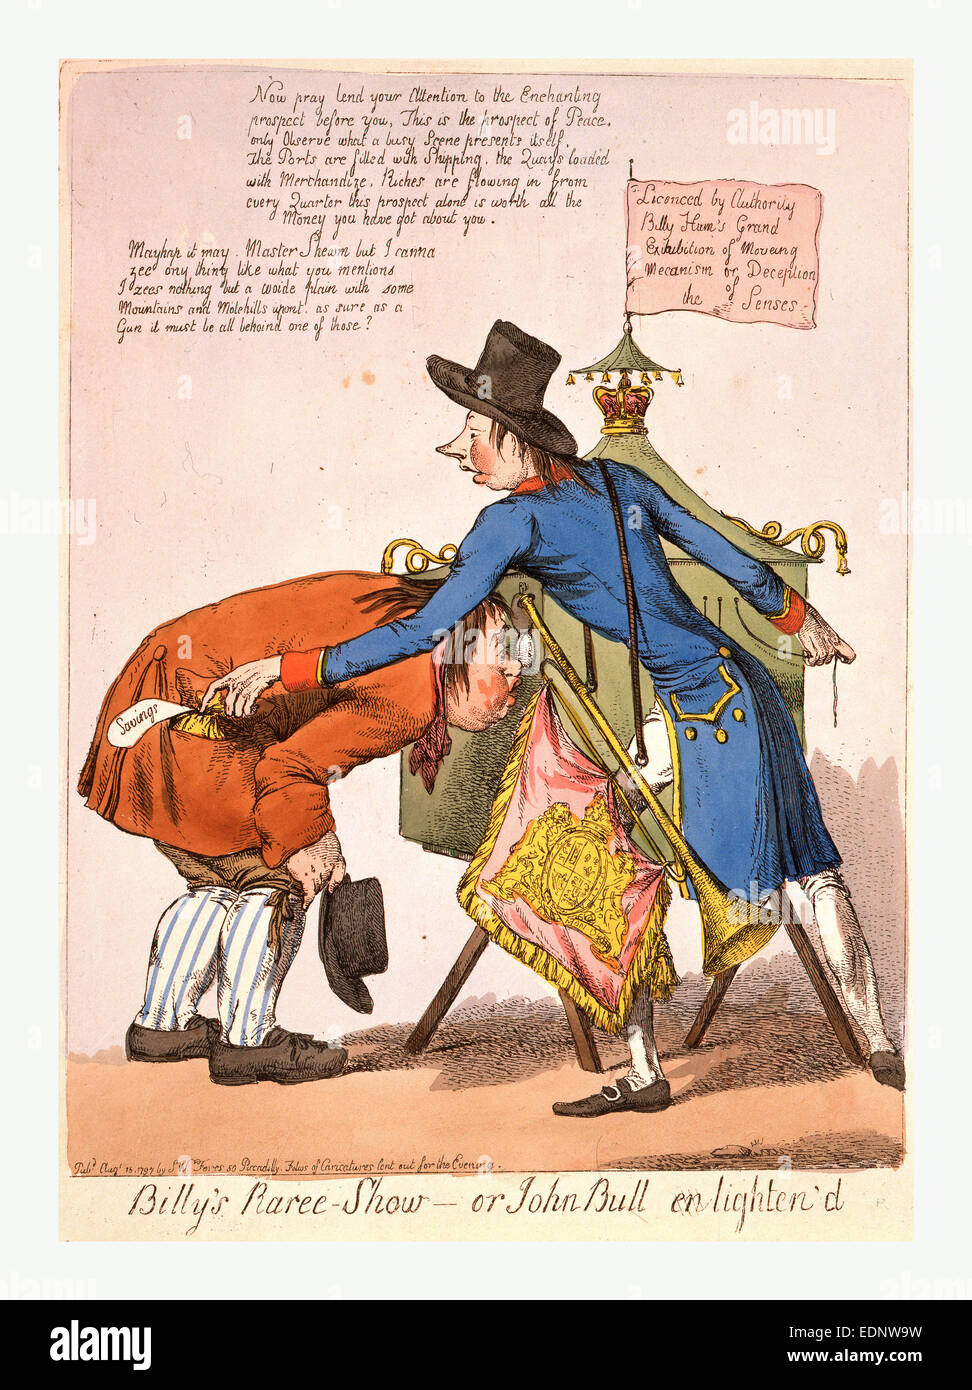 Billys Raree-Show oder John Bull En lighten'd, [England], Gravur 1797, Pitt, als Peep-Show Mann, zeichnet sich durch seine box Stockfoto